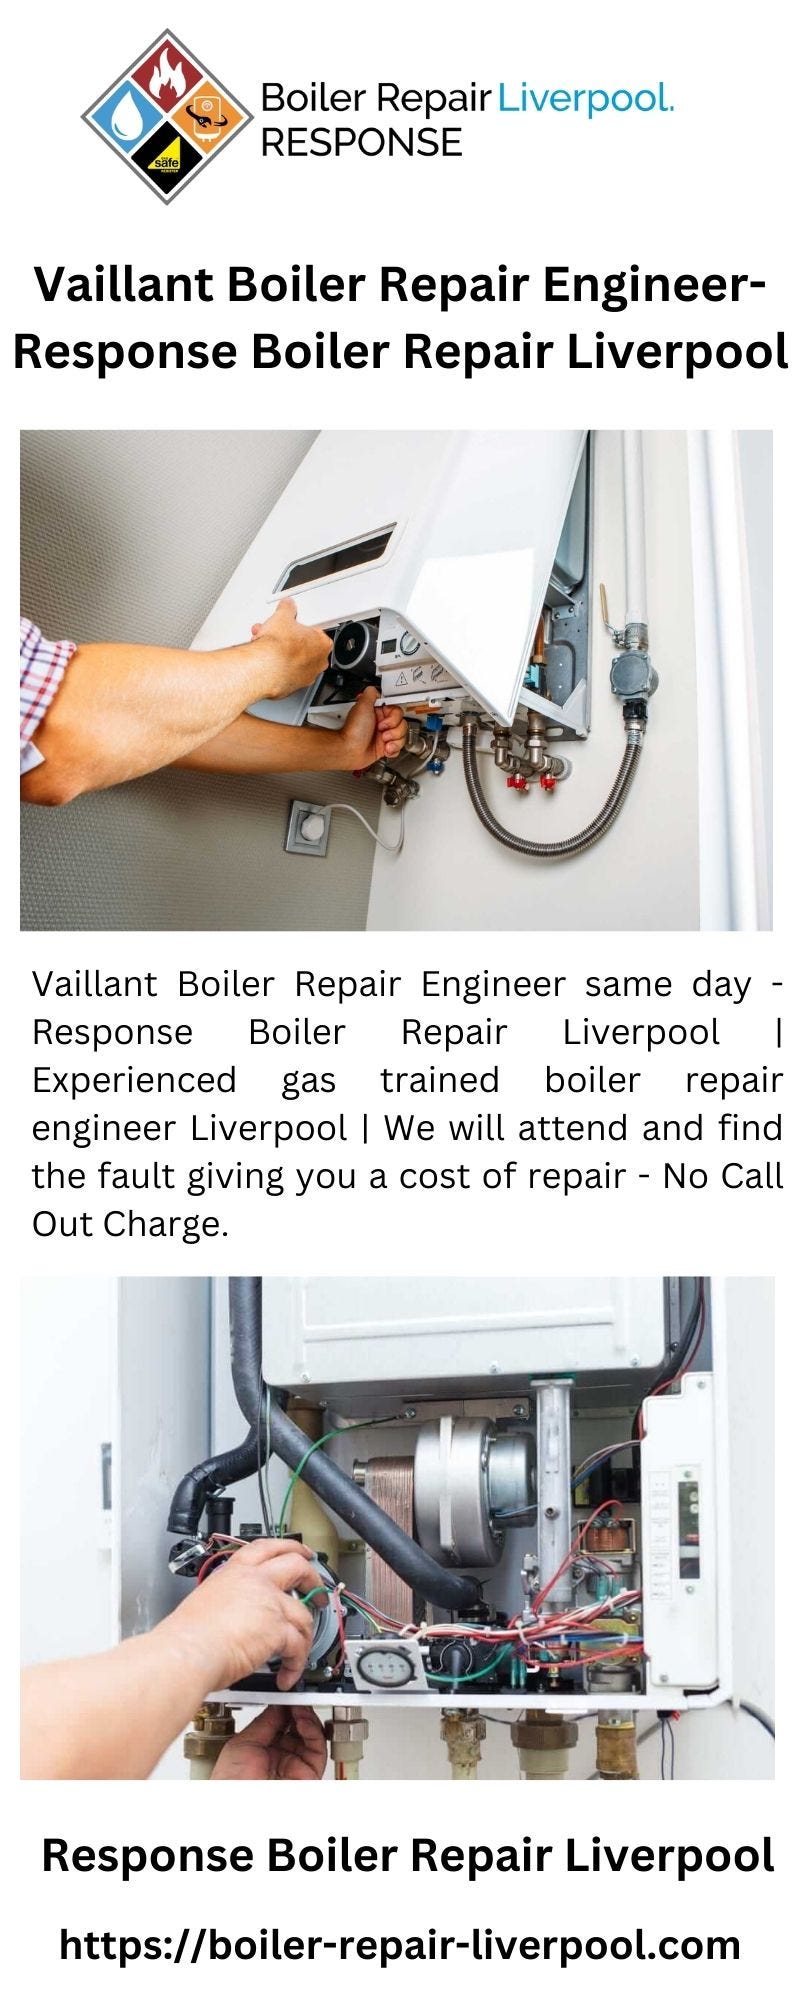 boiler-replacement-in-liverpool-benefits-increasing-efficiency